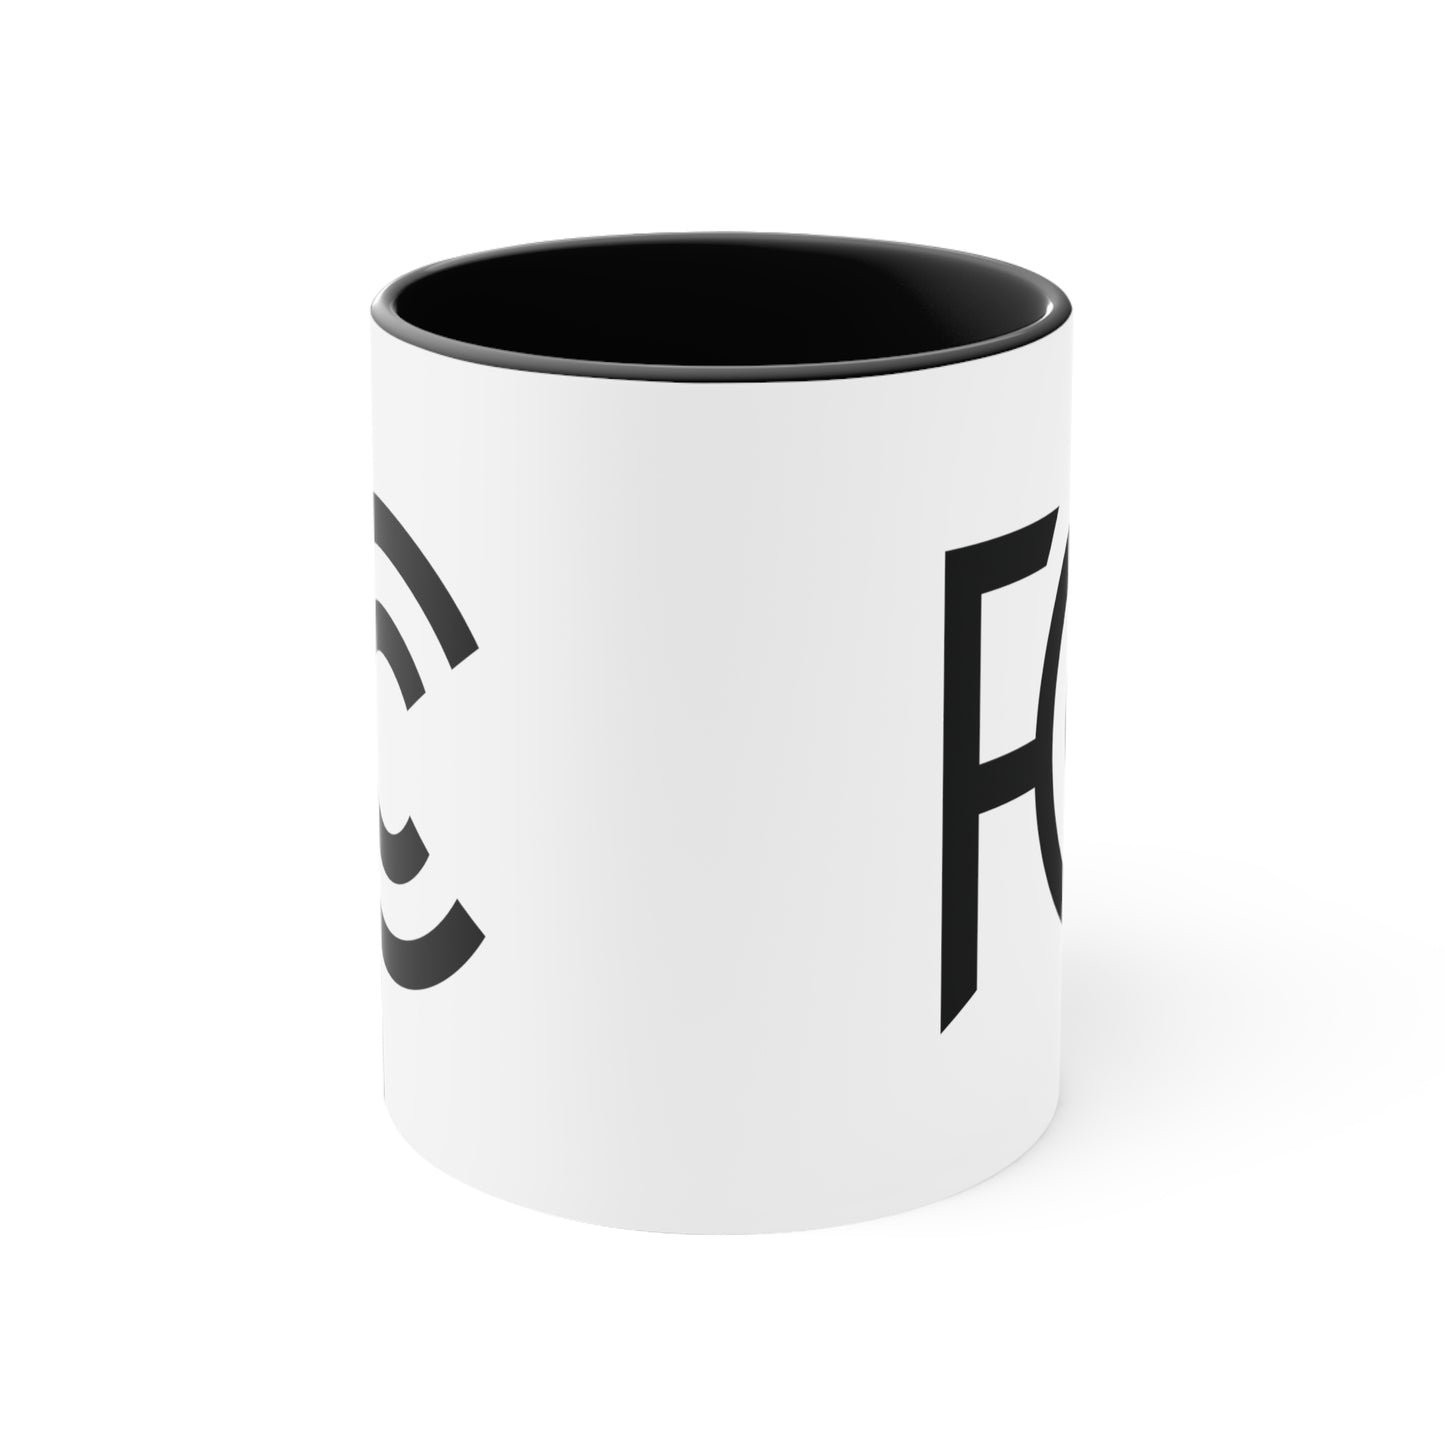 FCC Seal Coffee Mug - Double Sided Black Accent White Ceramic 11oz by TheGlassyLass.com